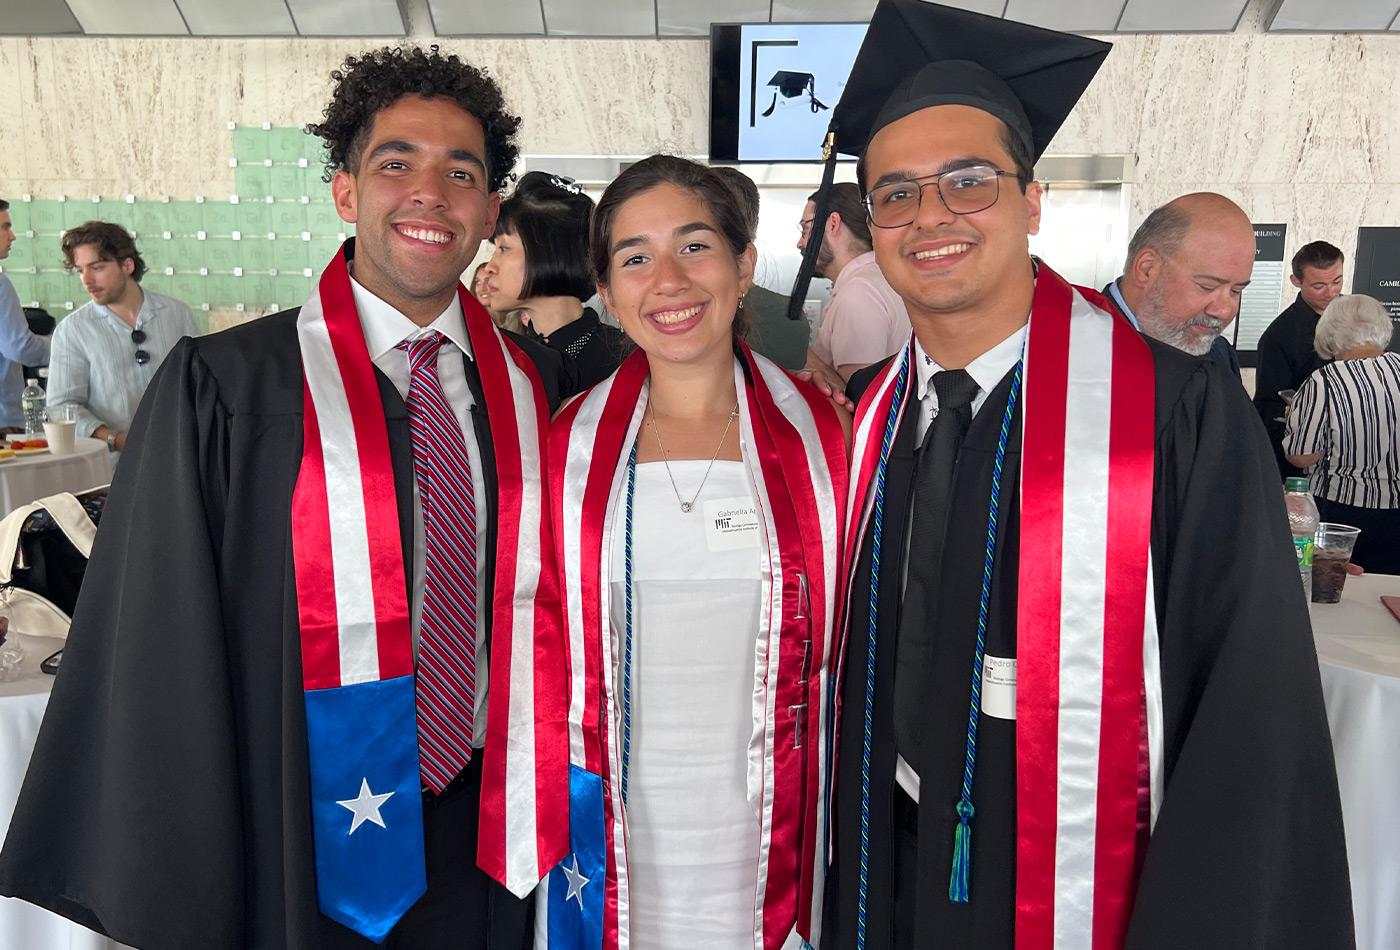 Gabriel Caamaño, Gabriella Aponte, and Pedro Colon smile in their graduation robes at the reception event.